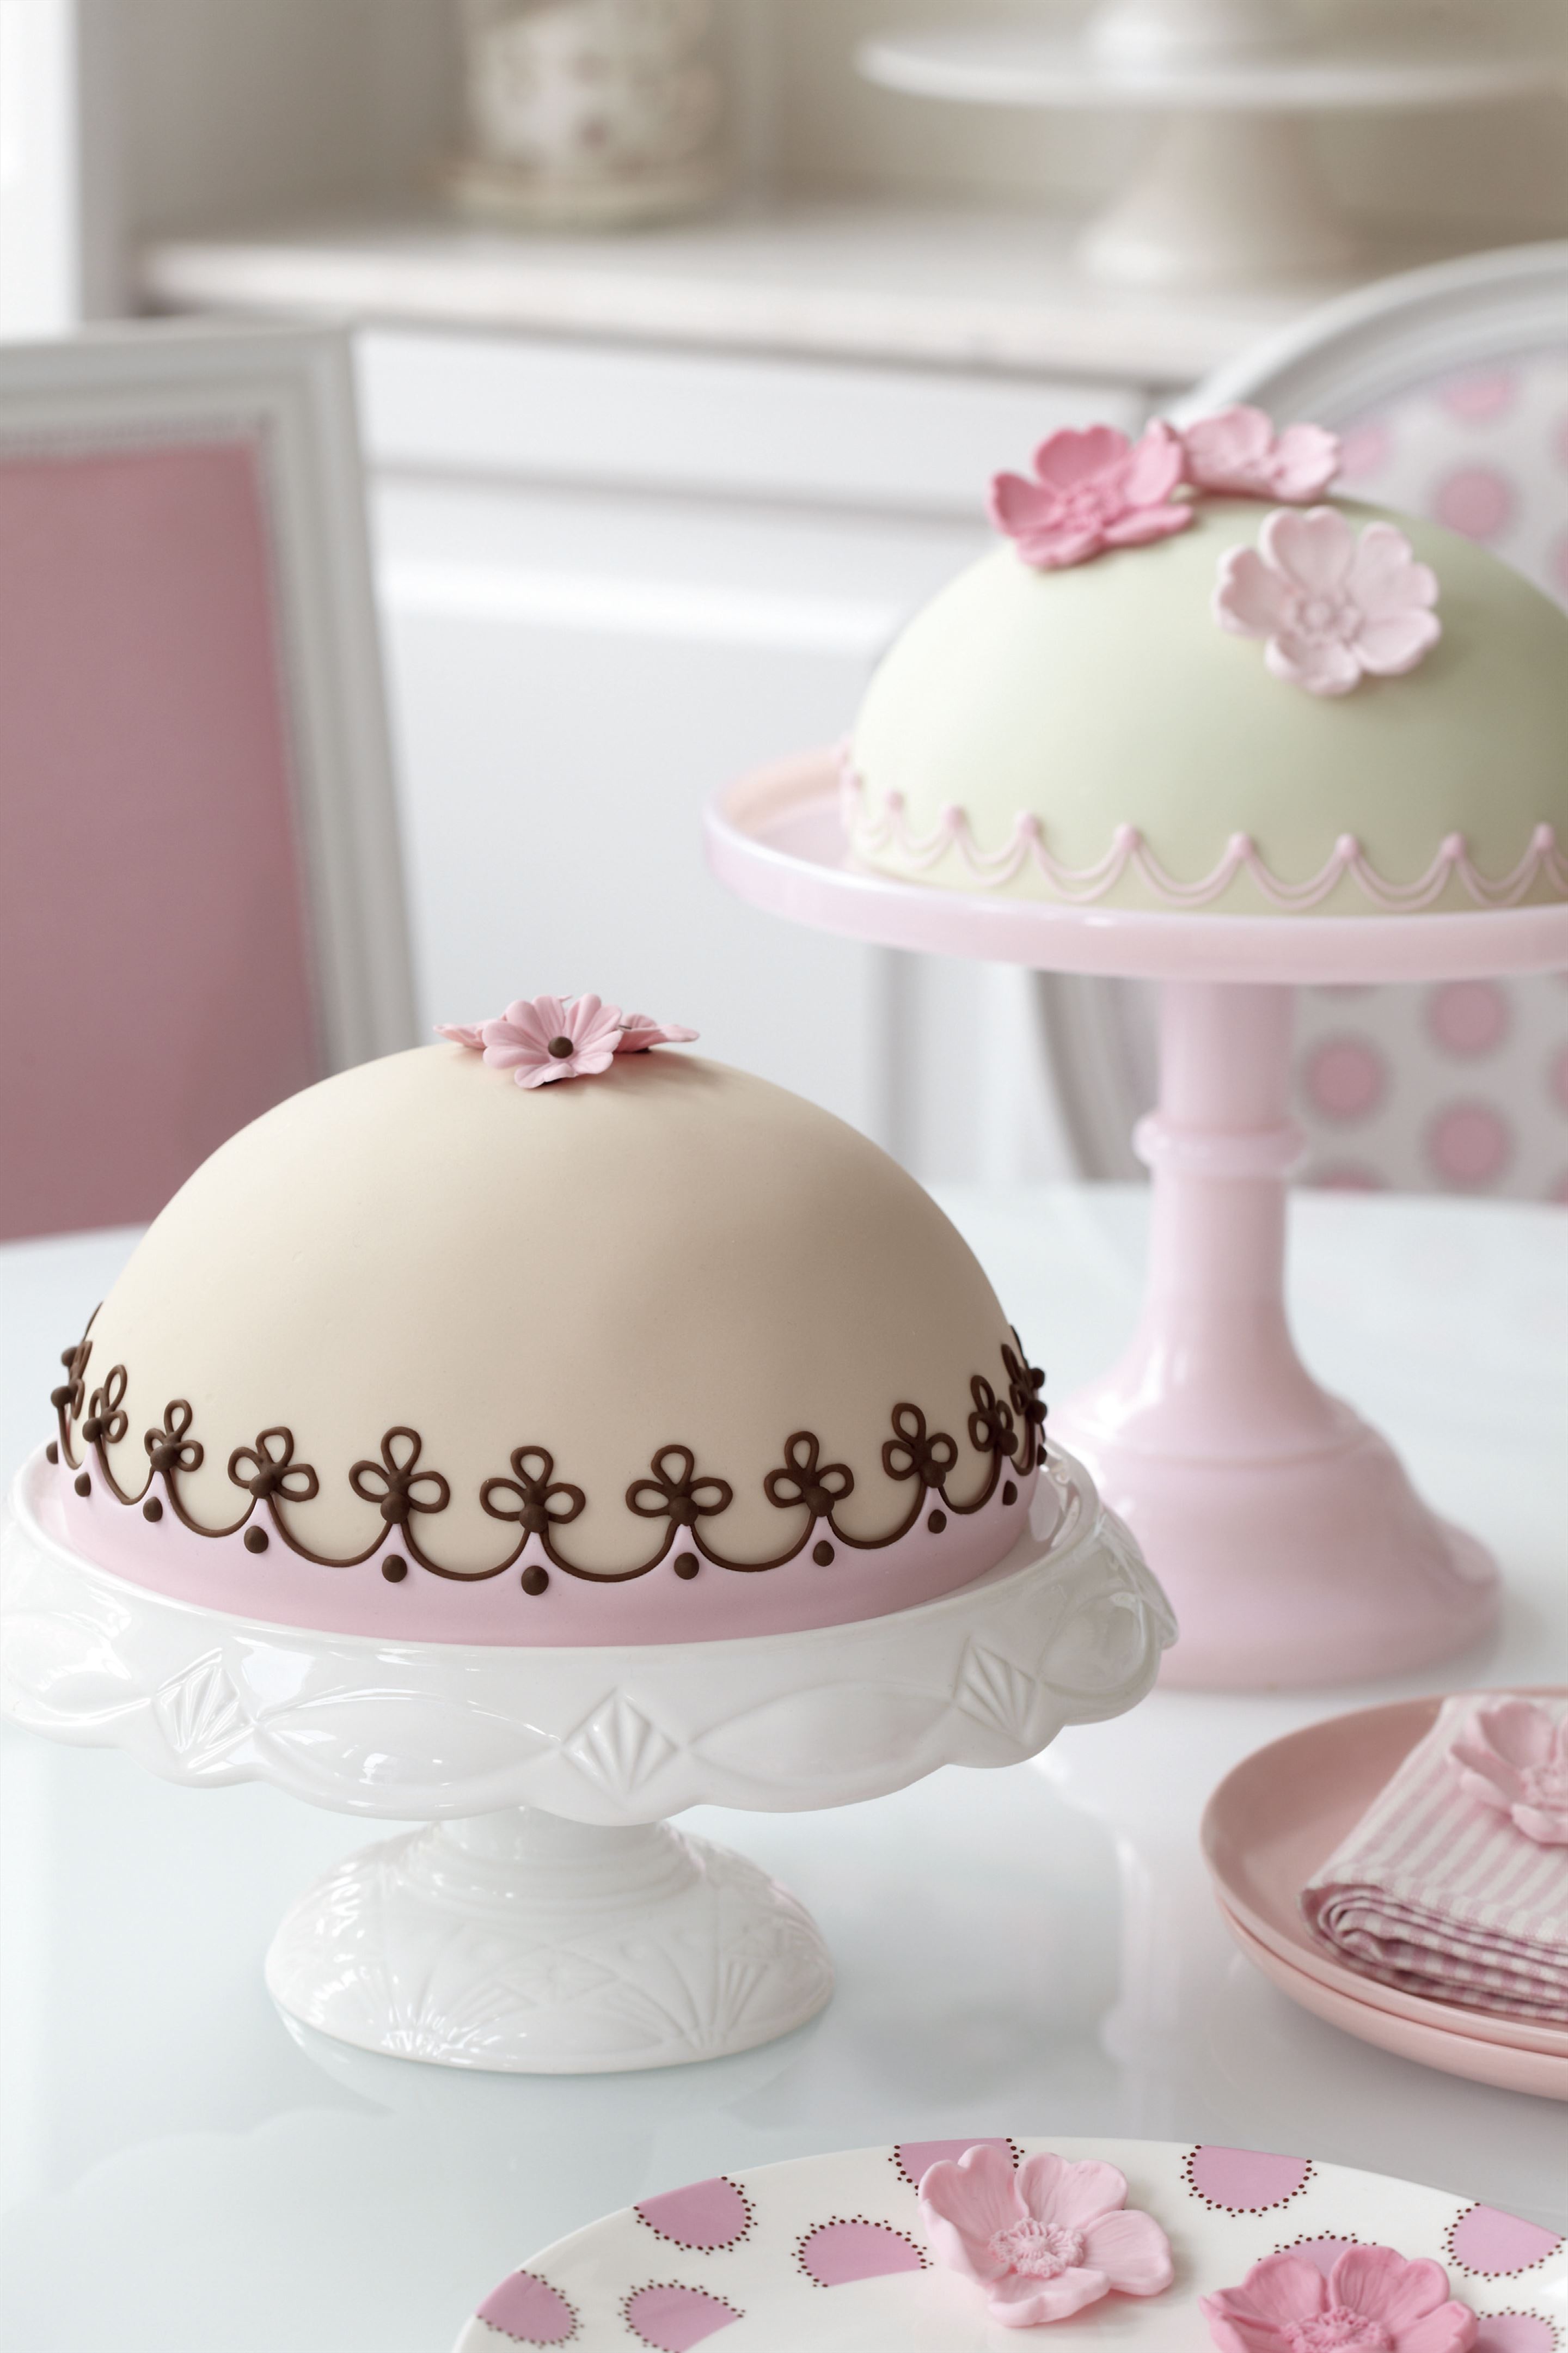 Raspberry & rose dome cake